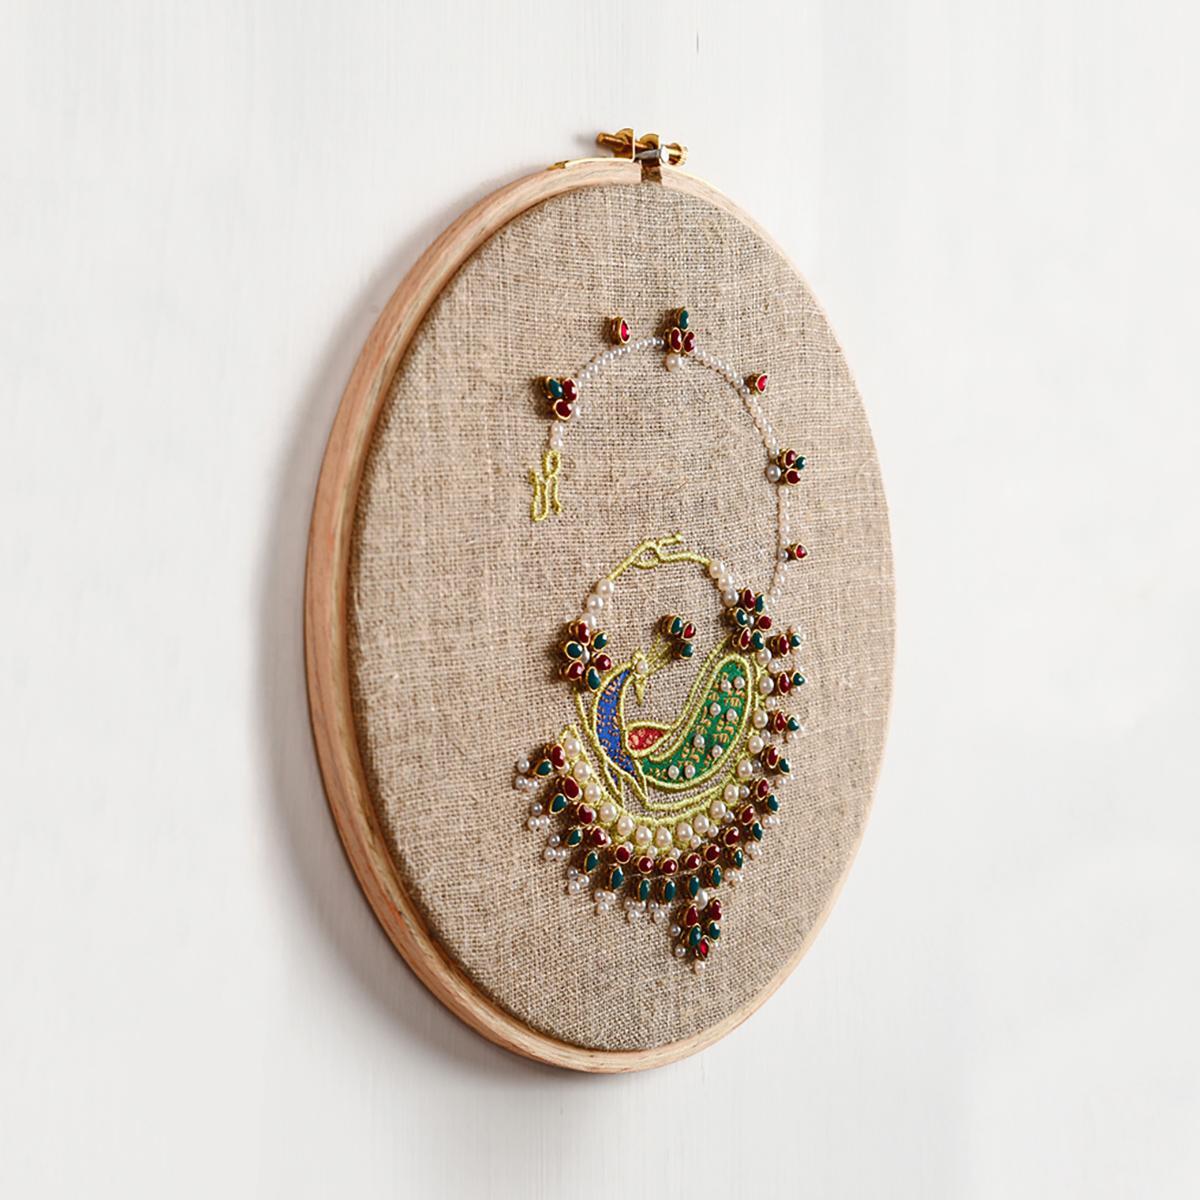 Nurge Embroidery Hoops: Archives - Nurge